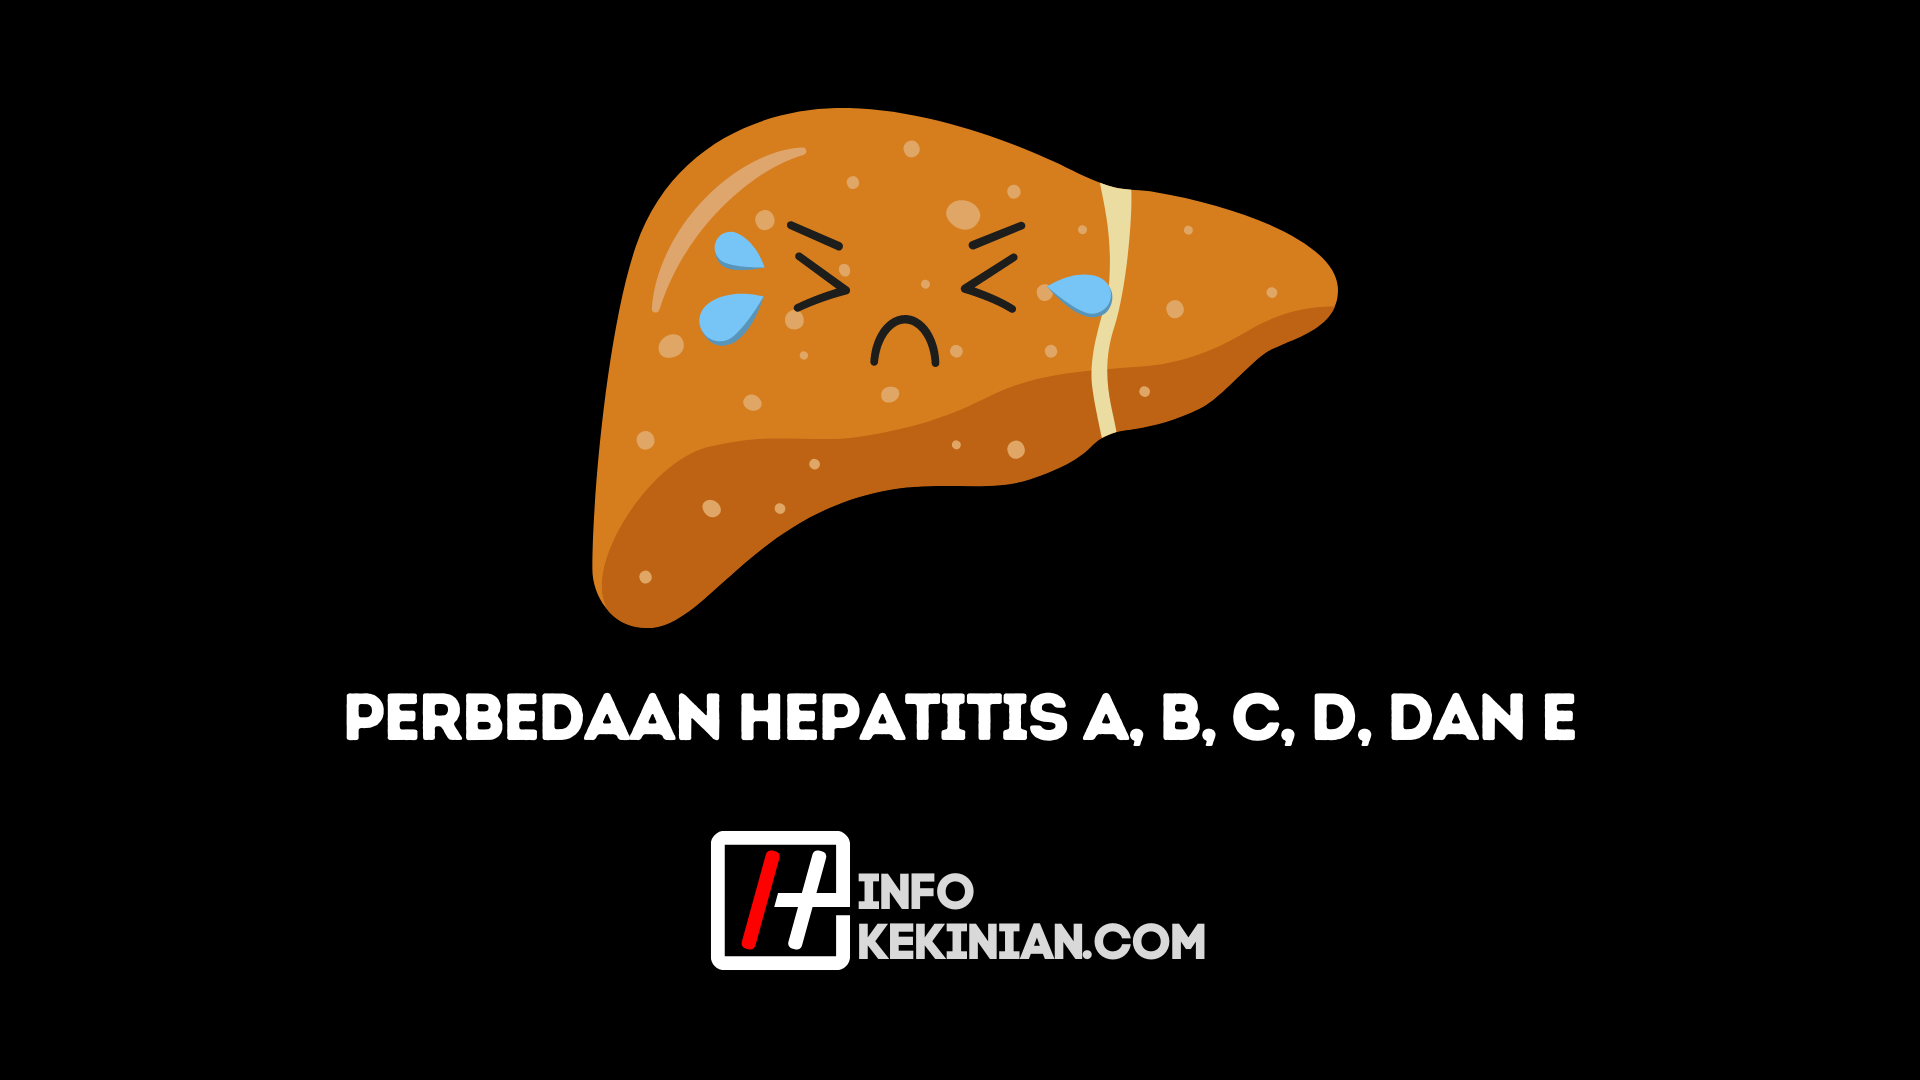 Hepatitis A, B, C, D, dan E